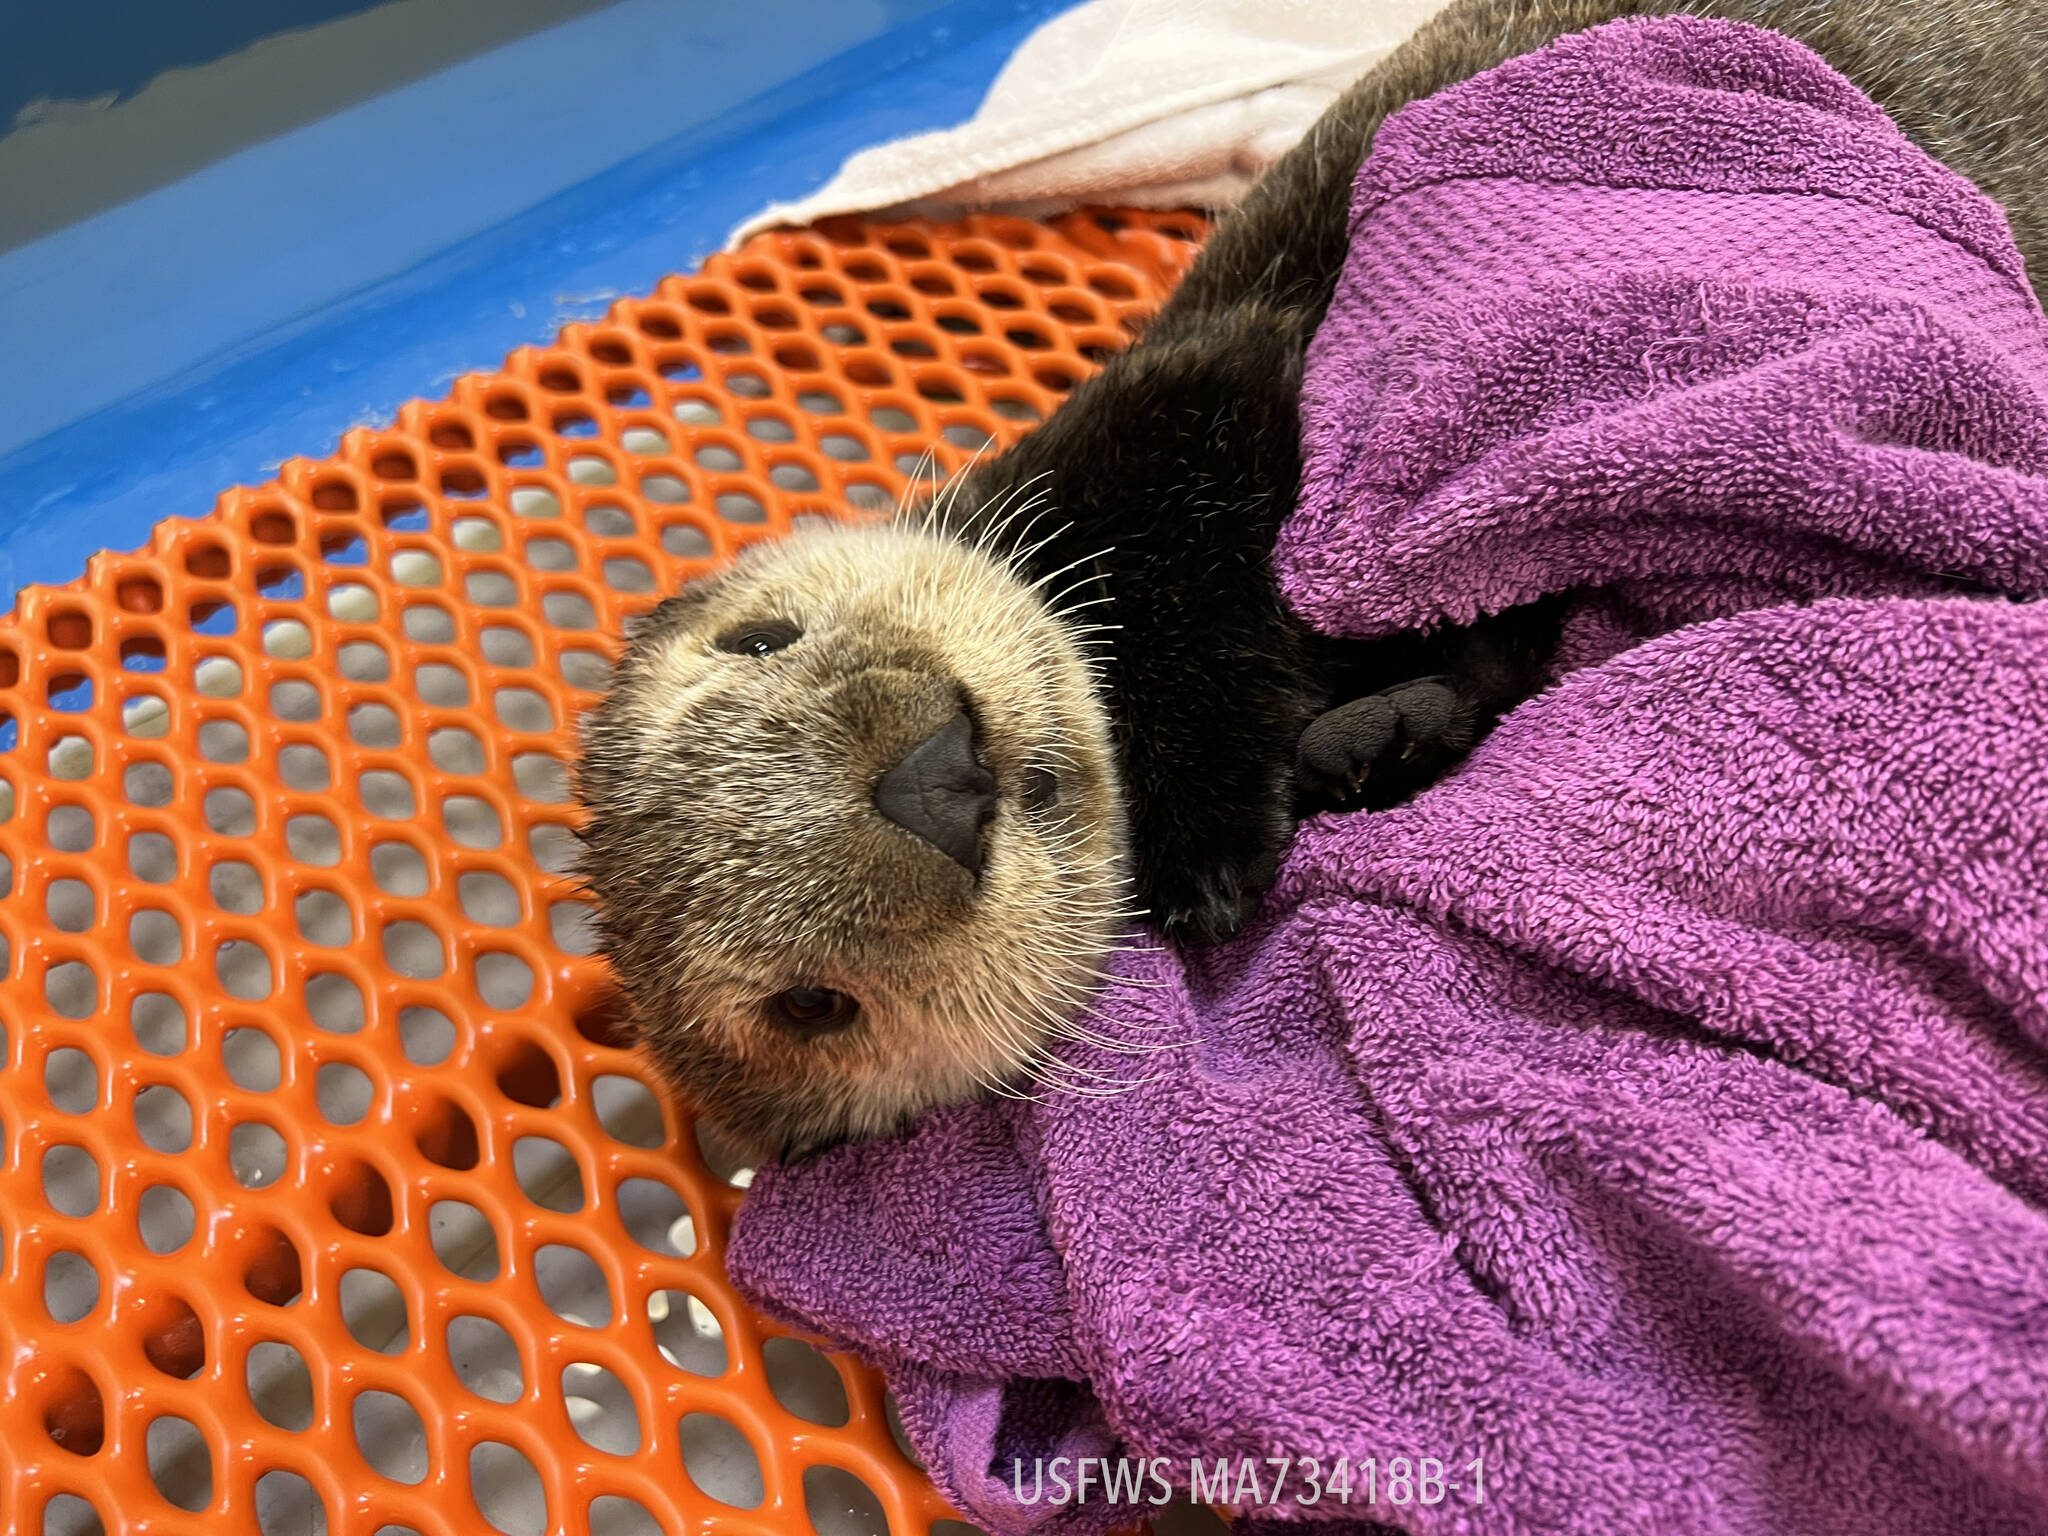 A rescued sea otter pup rescued undergoes care at the Alaska SeaLife Center in Seward, Alaska. (Photo courtesy Alaska SeaLife Center)